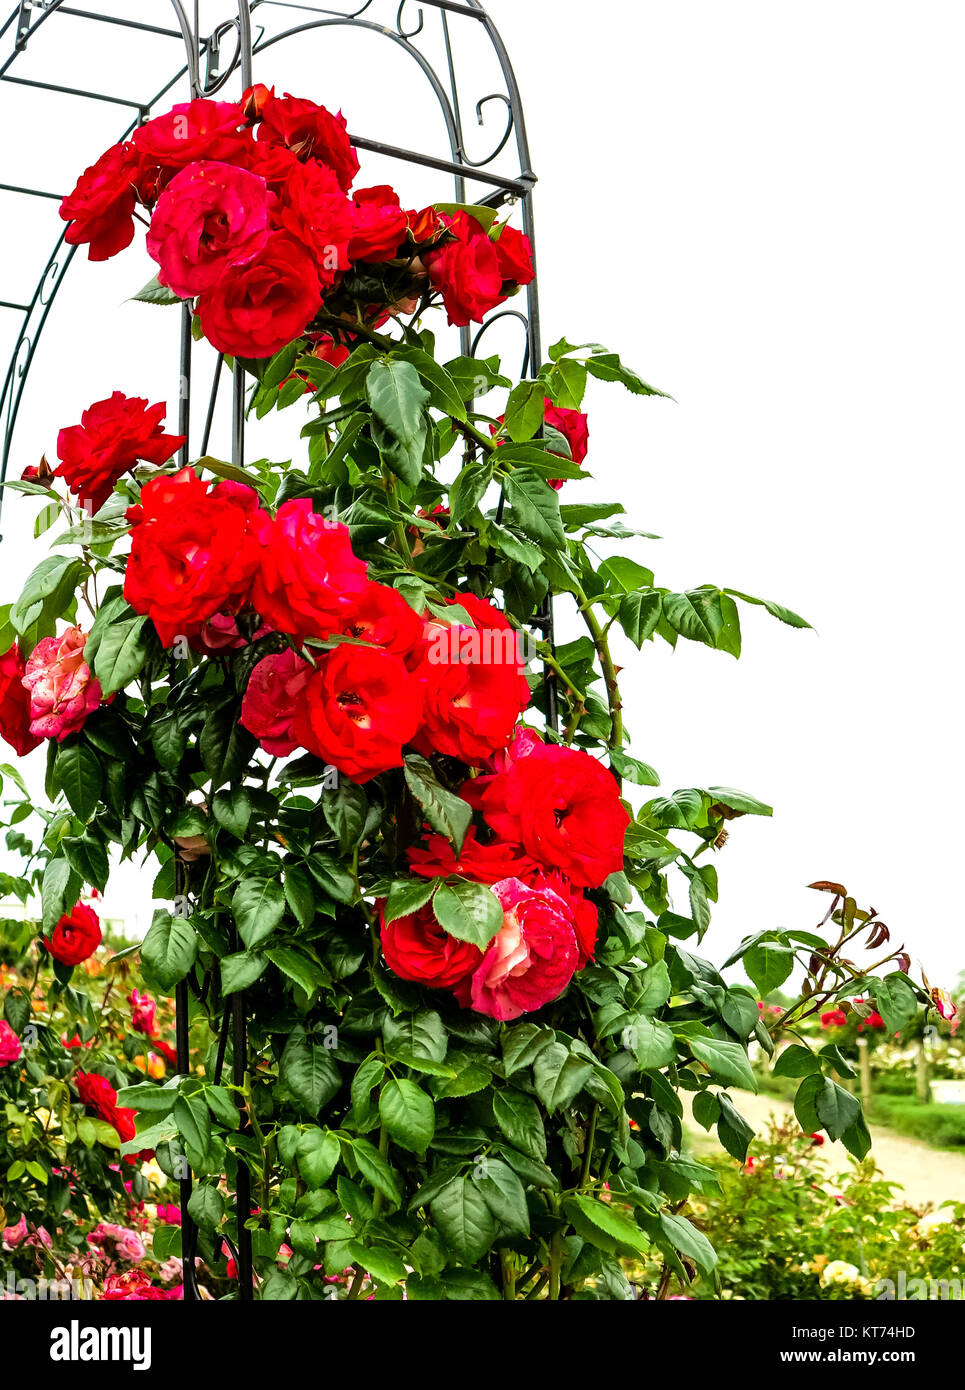 alte rose rampicanti rosse in un roseto Foto stock - Alamy